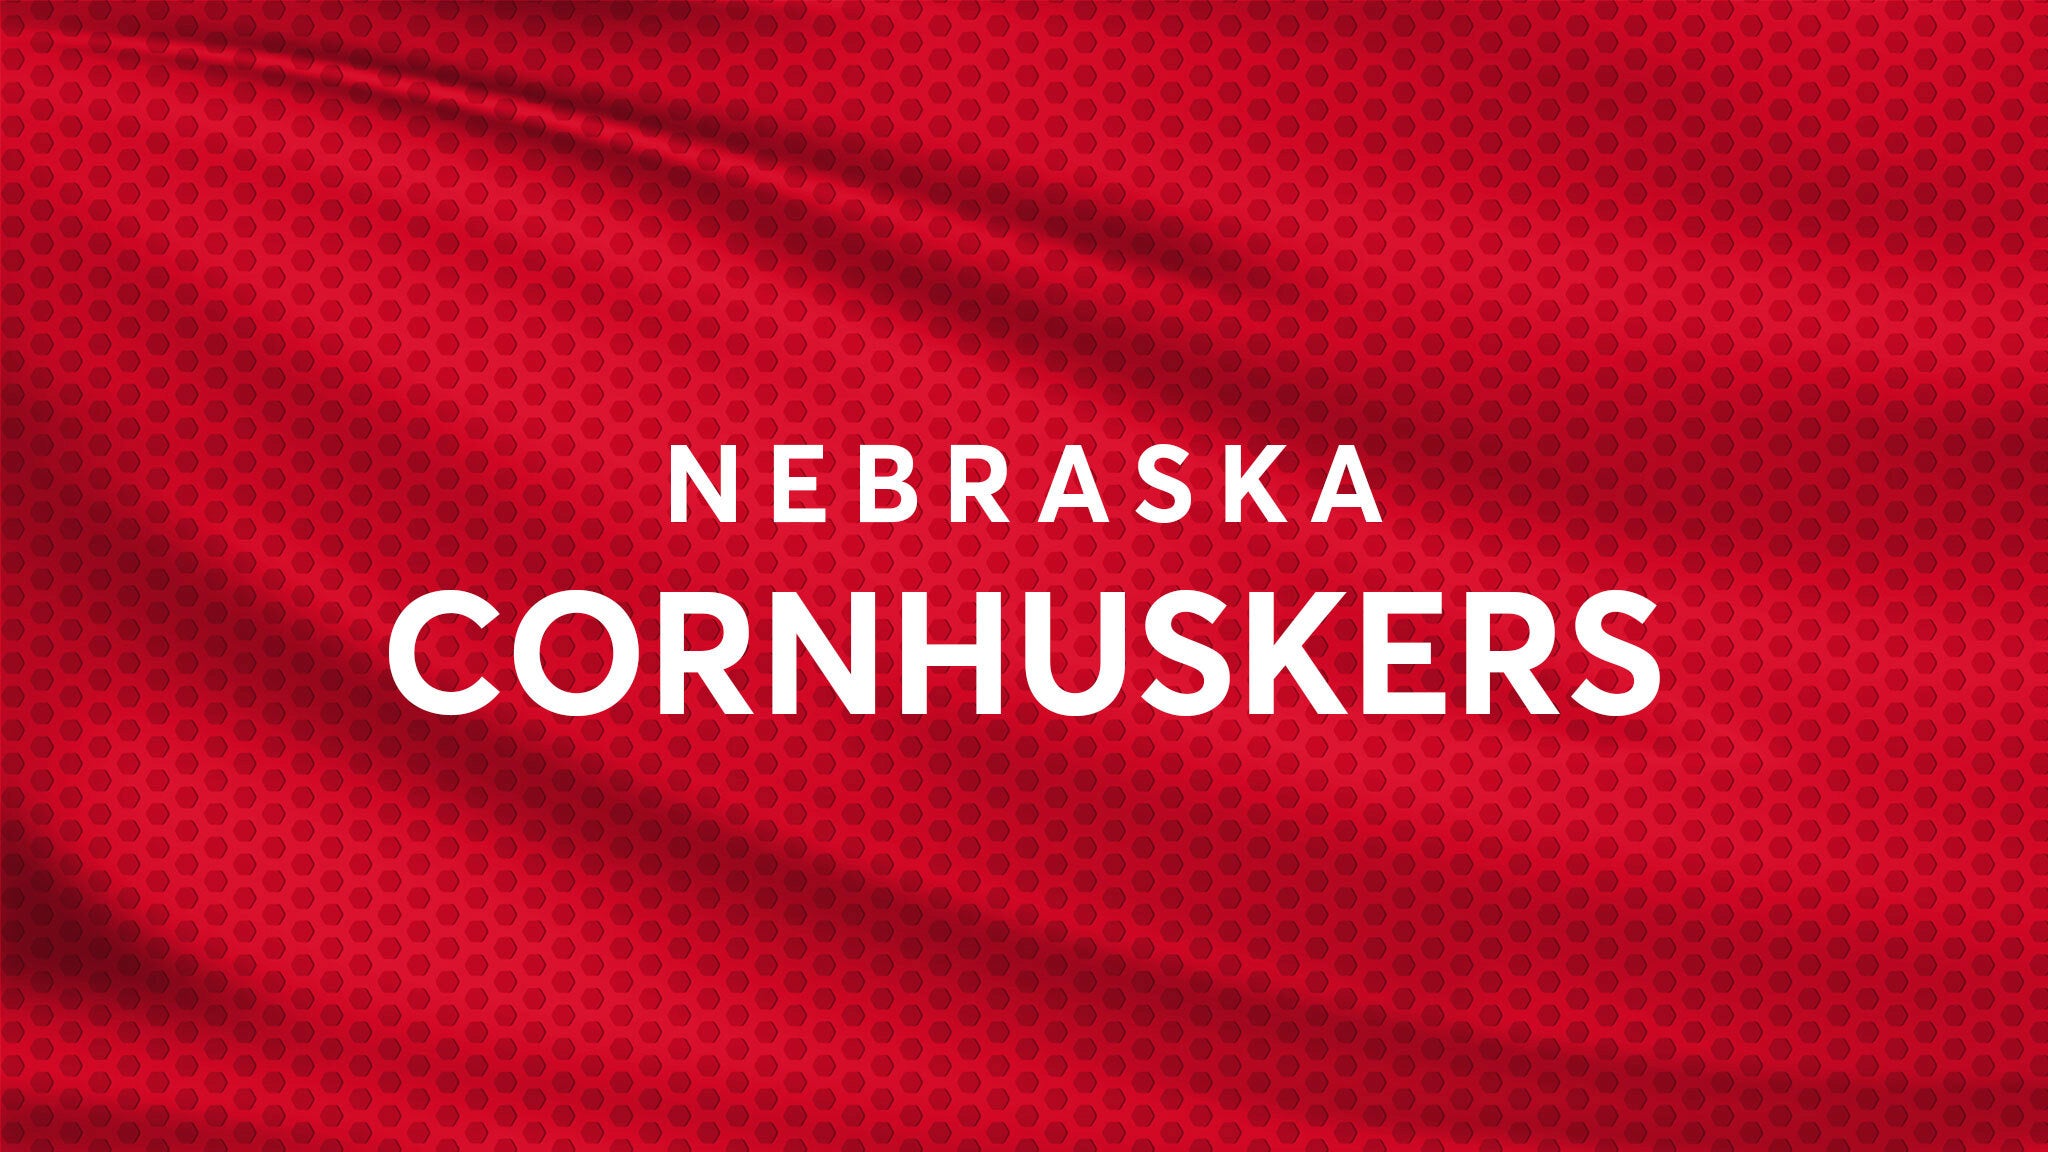 Nebraska Cornhuskers Baseball vs. Indiana Hoosiers Baseball